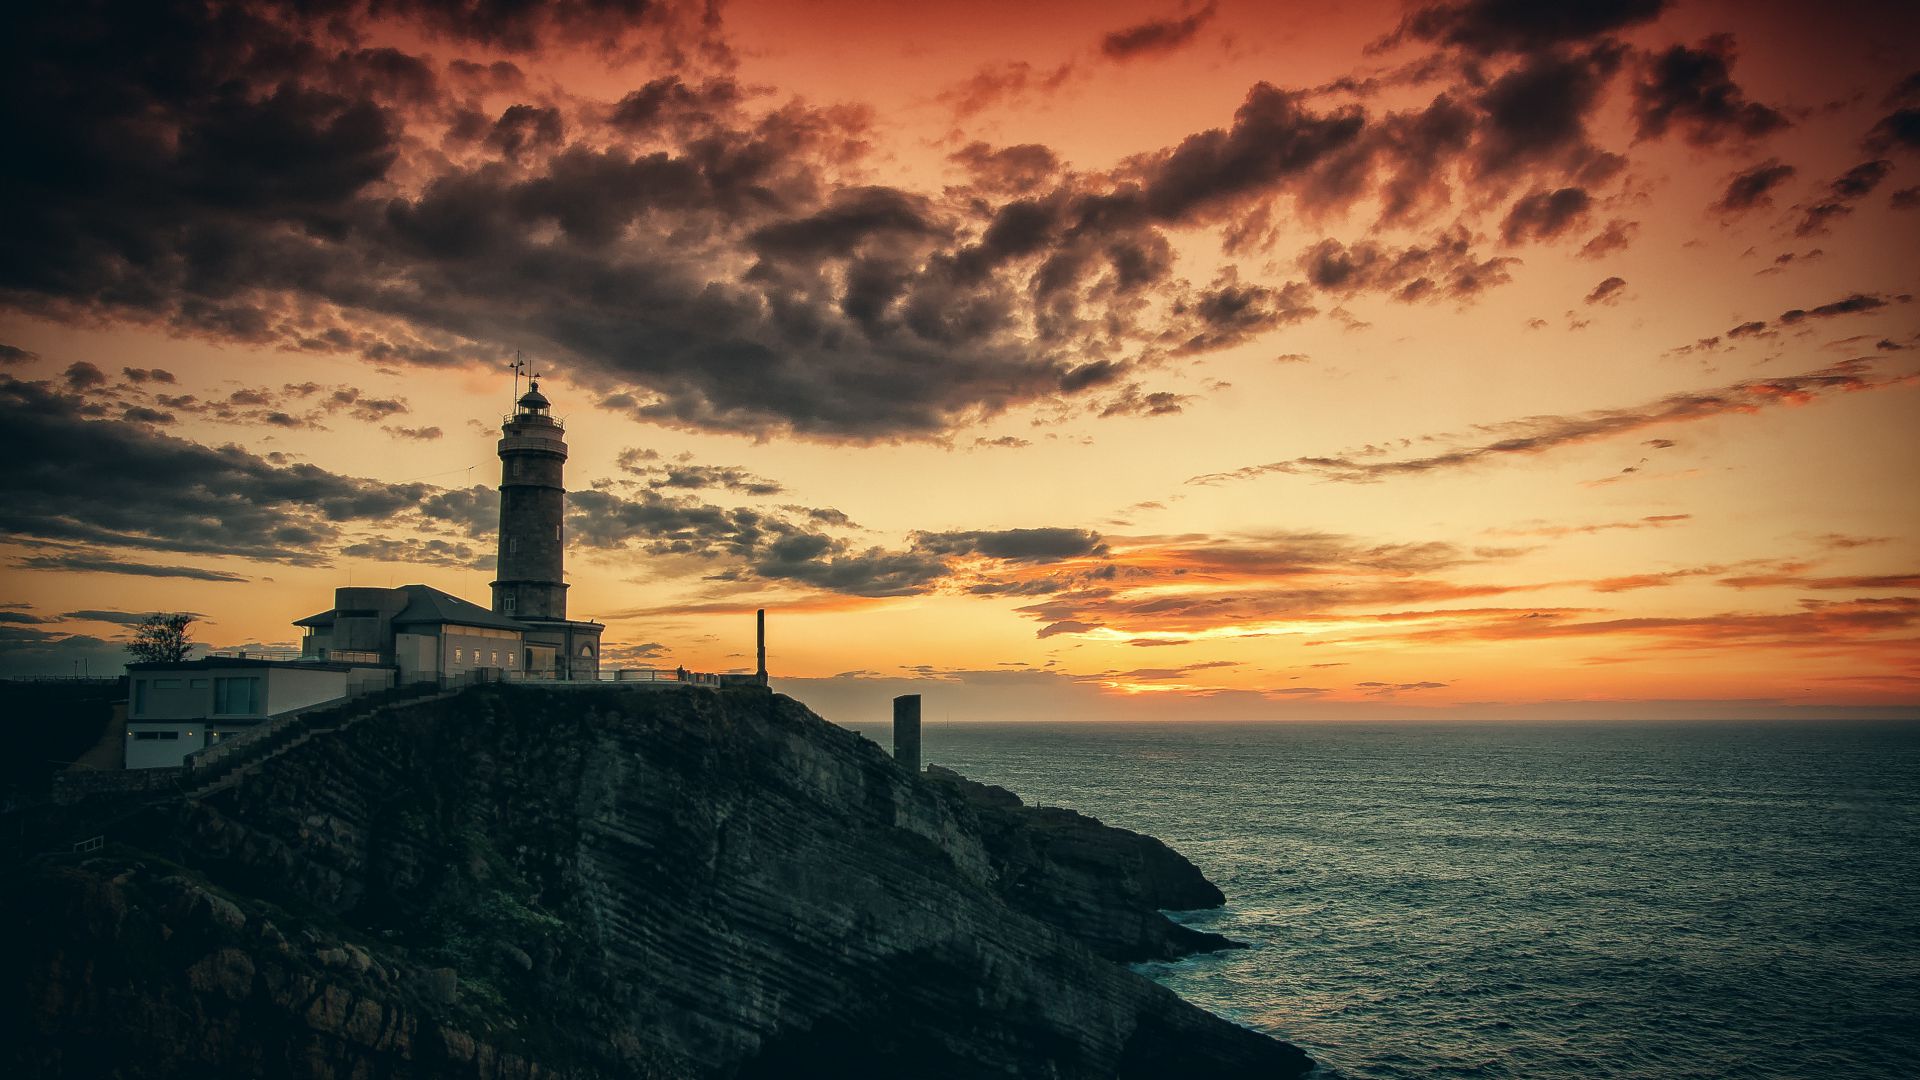 Маяк, HD, 4k, скалы, море, закат, Lighthouse, HD, 4k wallpaper, rocks, sea, sunset (horizontal)